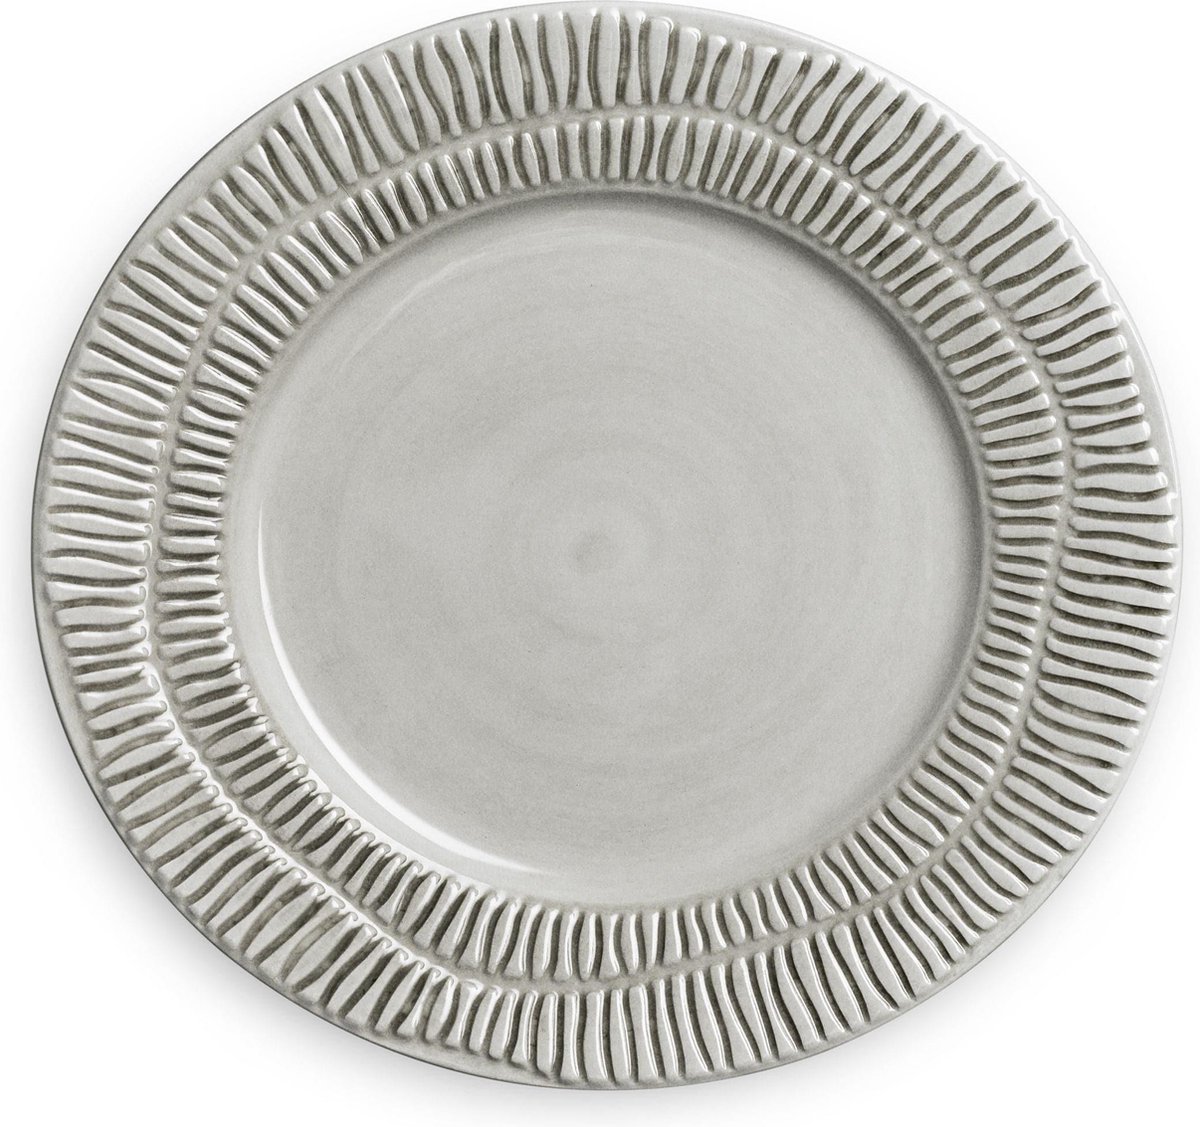 Mateus Collection - Ontbijtbord Stripes 20cm grey - Kleine borden